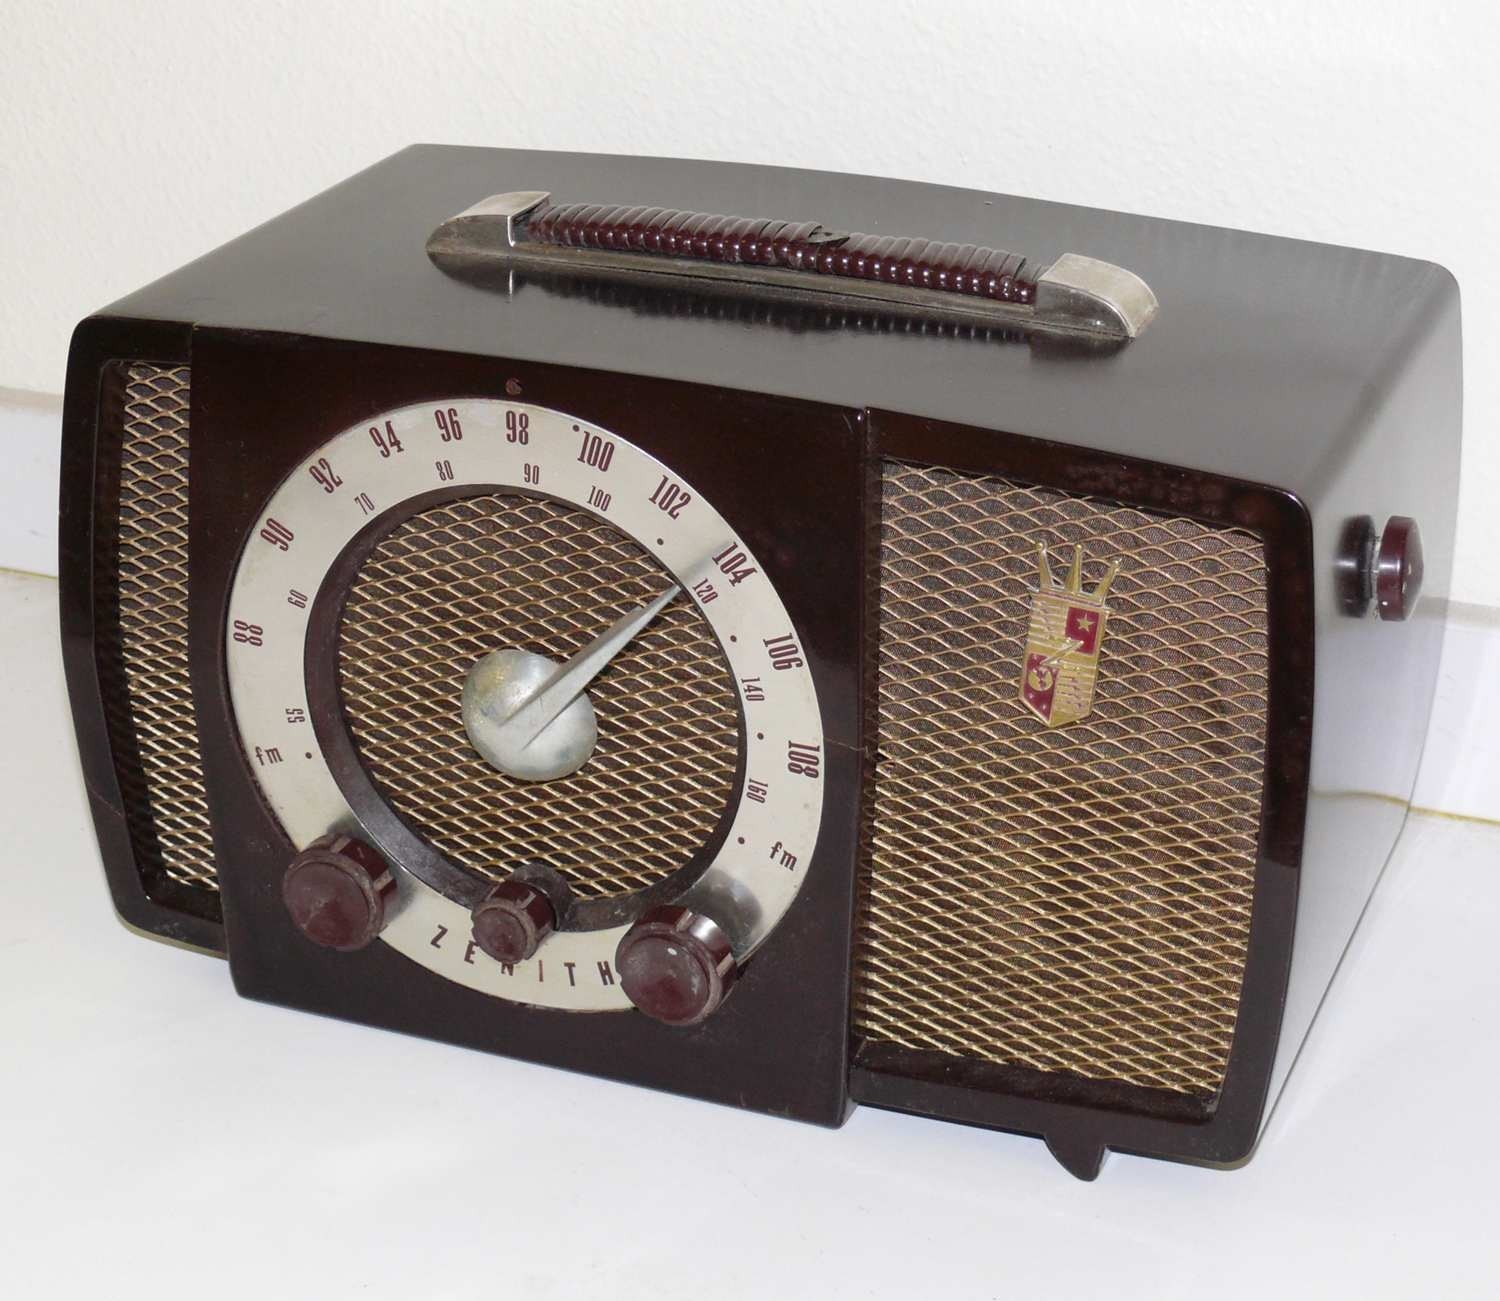 1950's Zenith Bakelite AM/FM radio